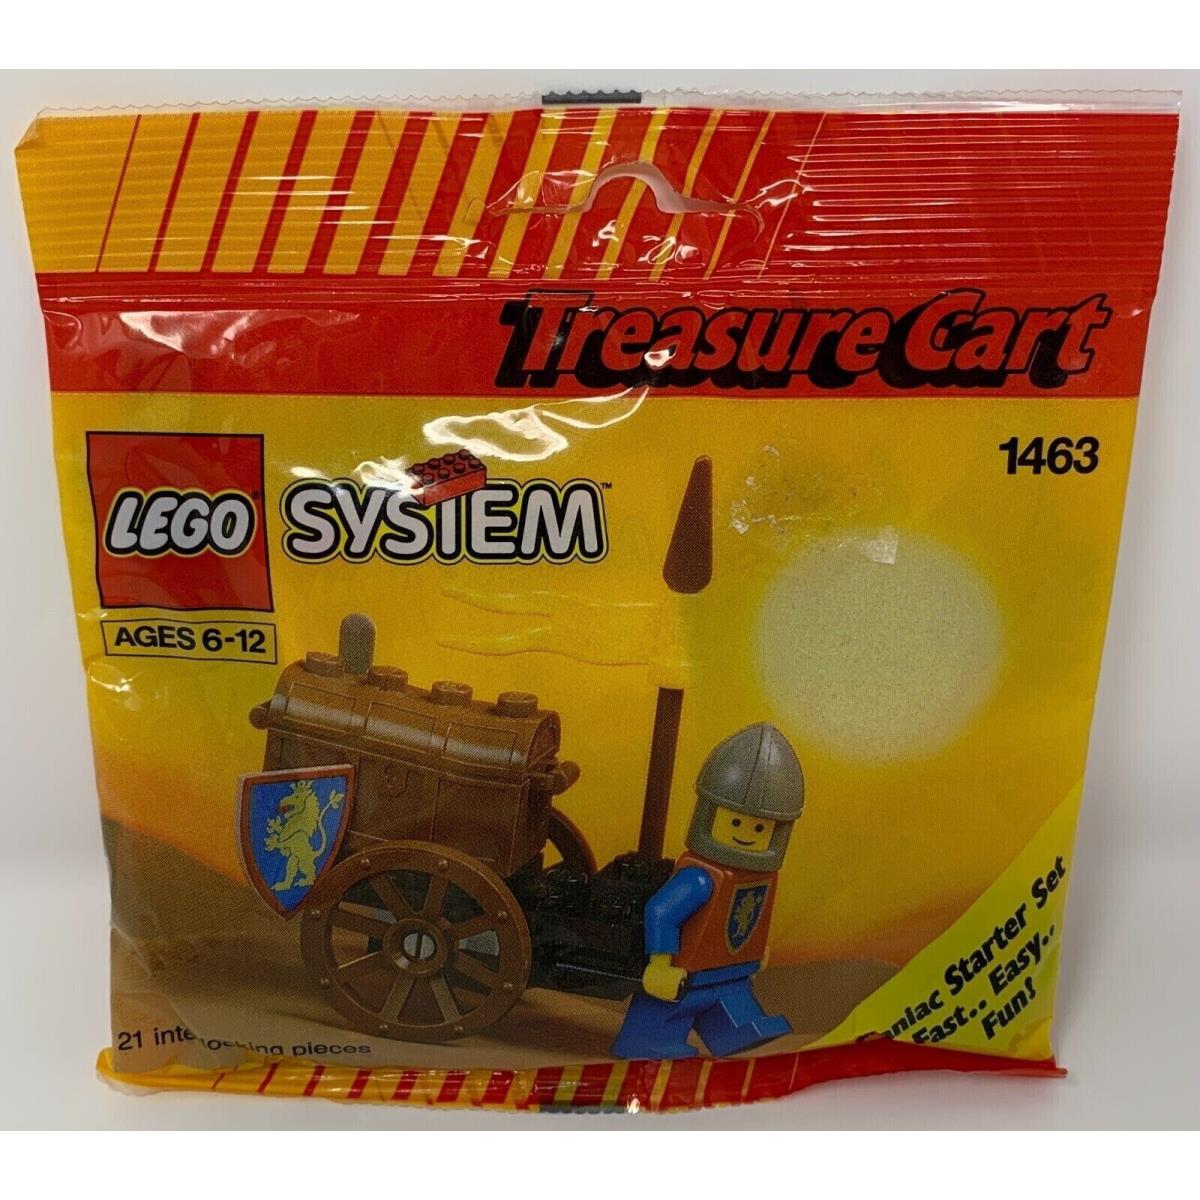 Lego 1463 System Treasure Cart